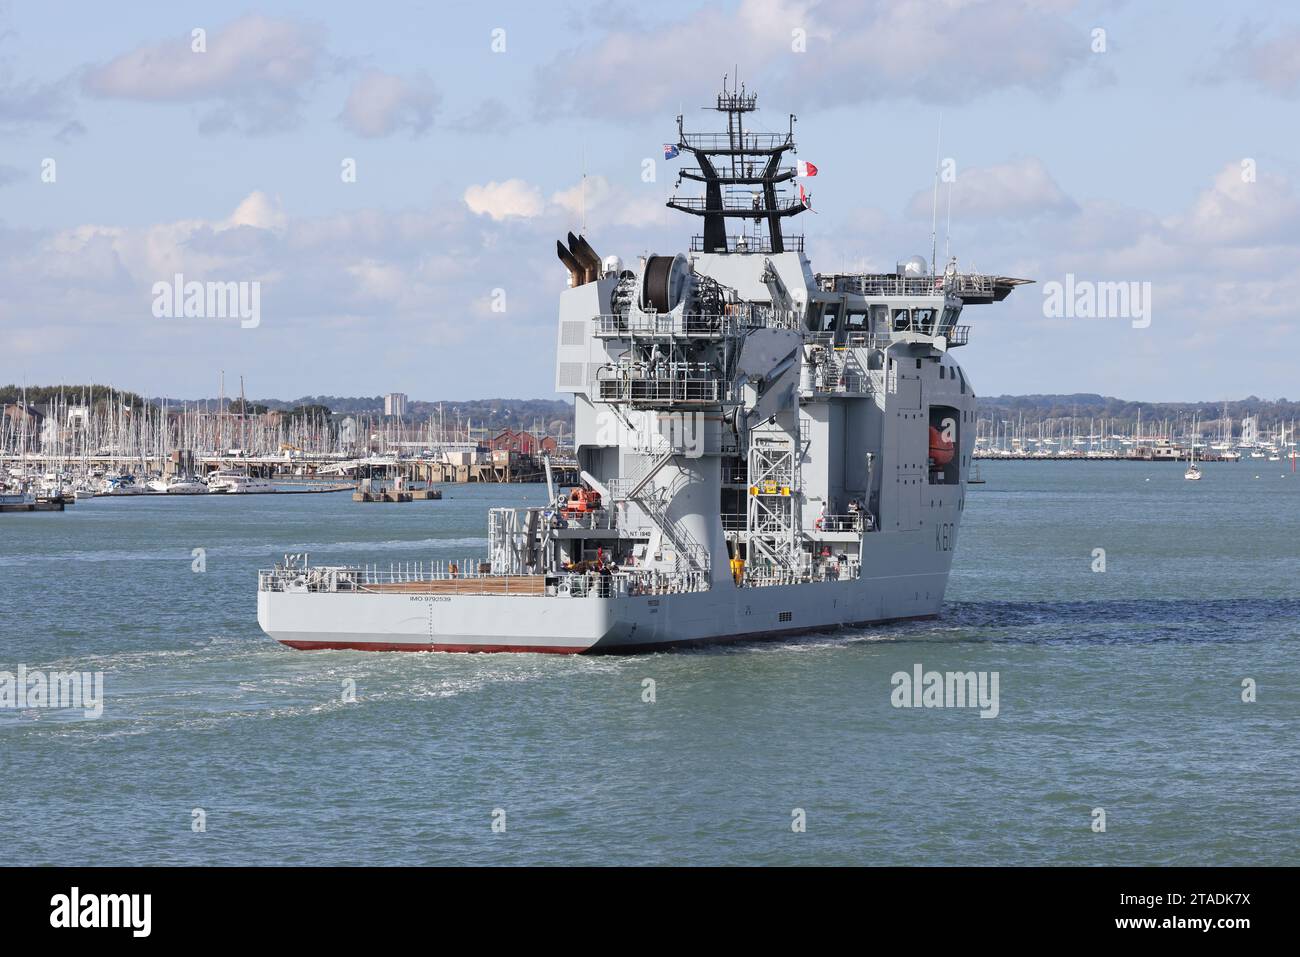 The Royal Fleet Auxiliary’s latest ship RFA PROTEUS moves slowly towards a berth in the Naval Base Stock Photo